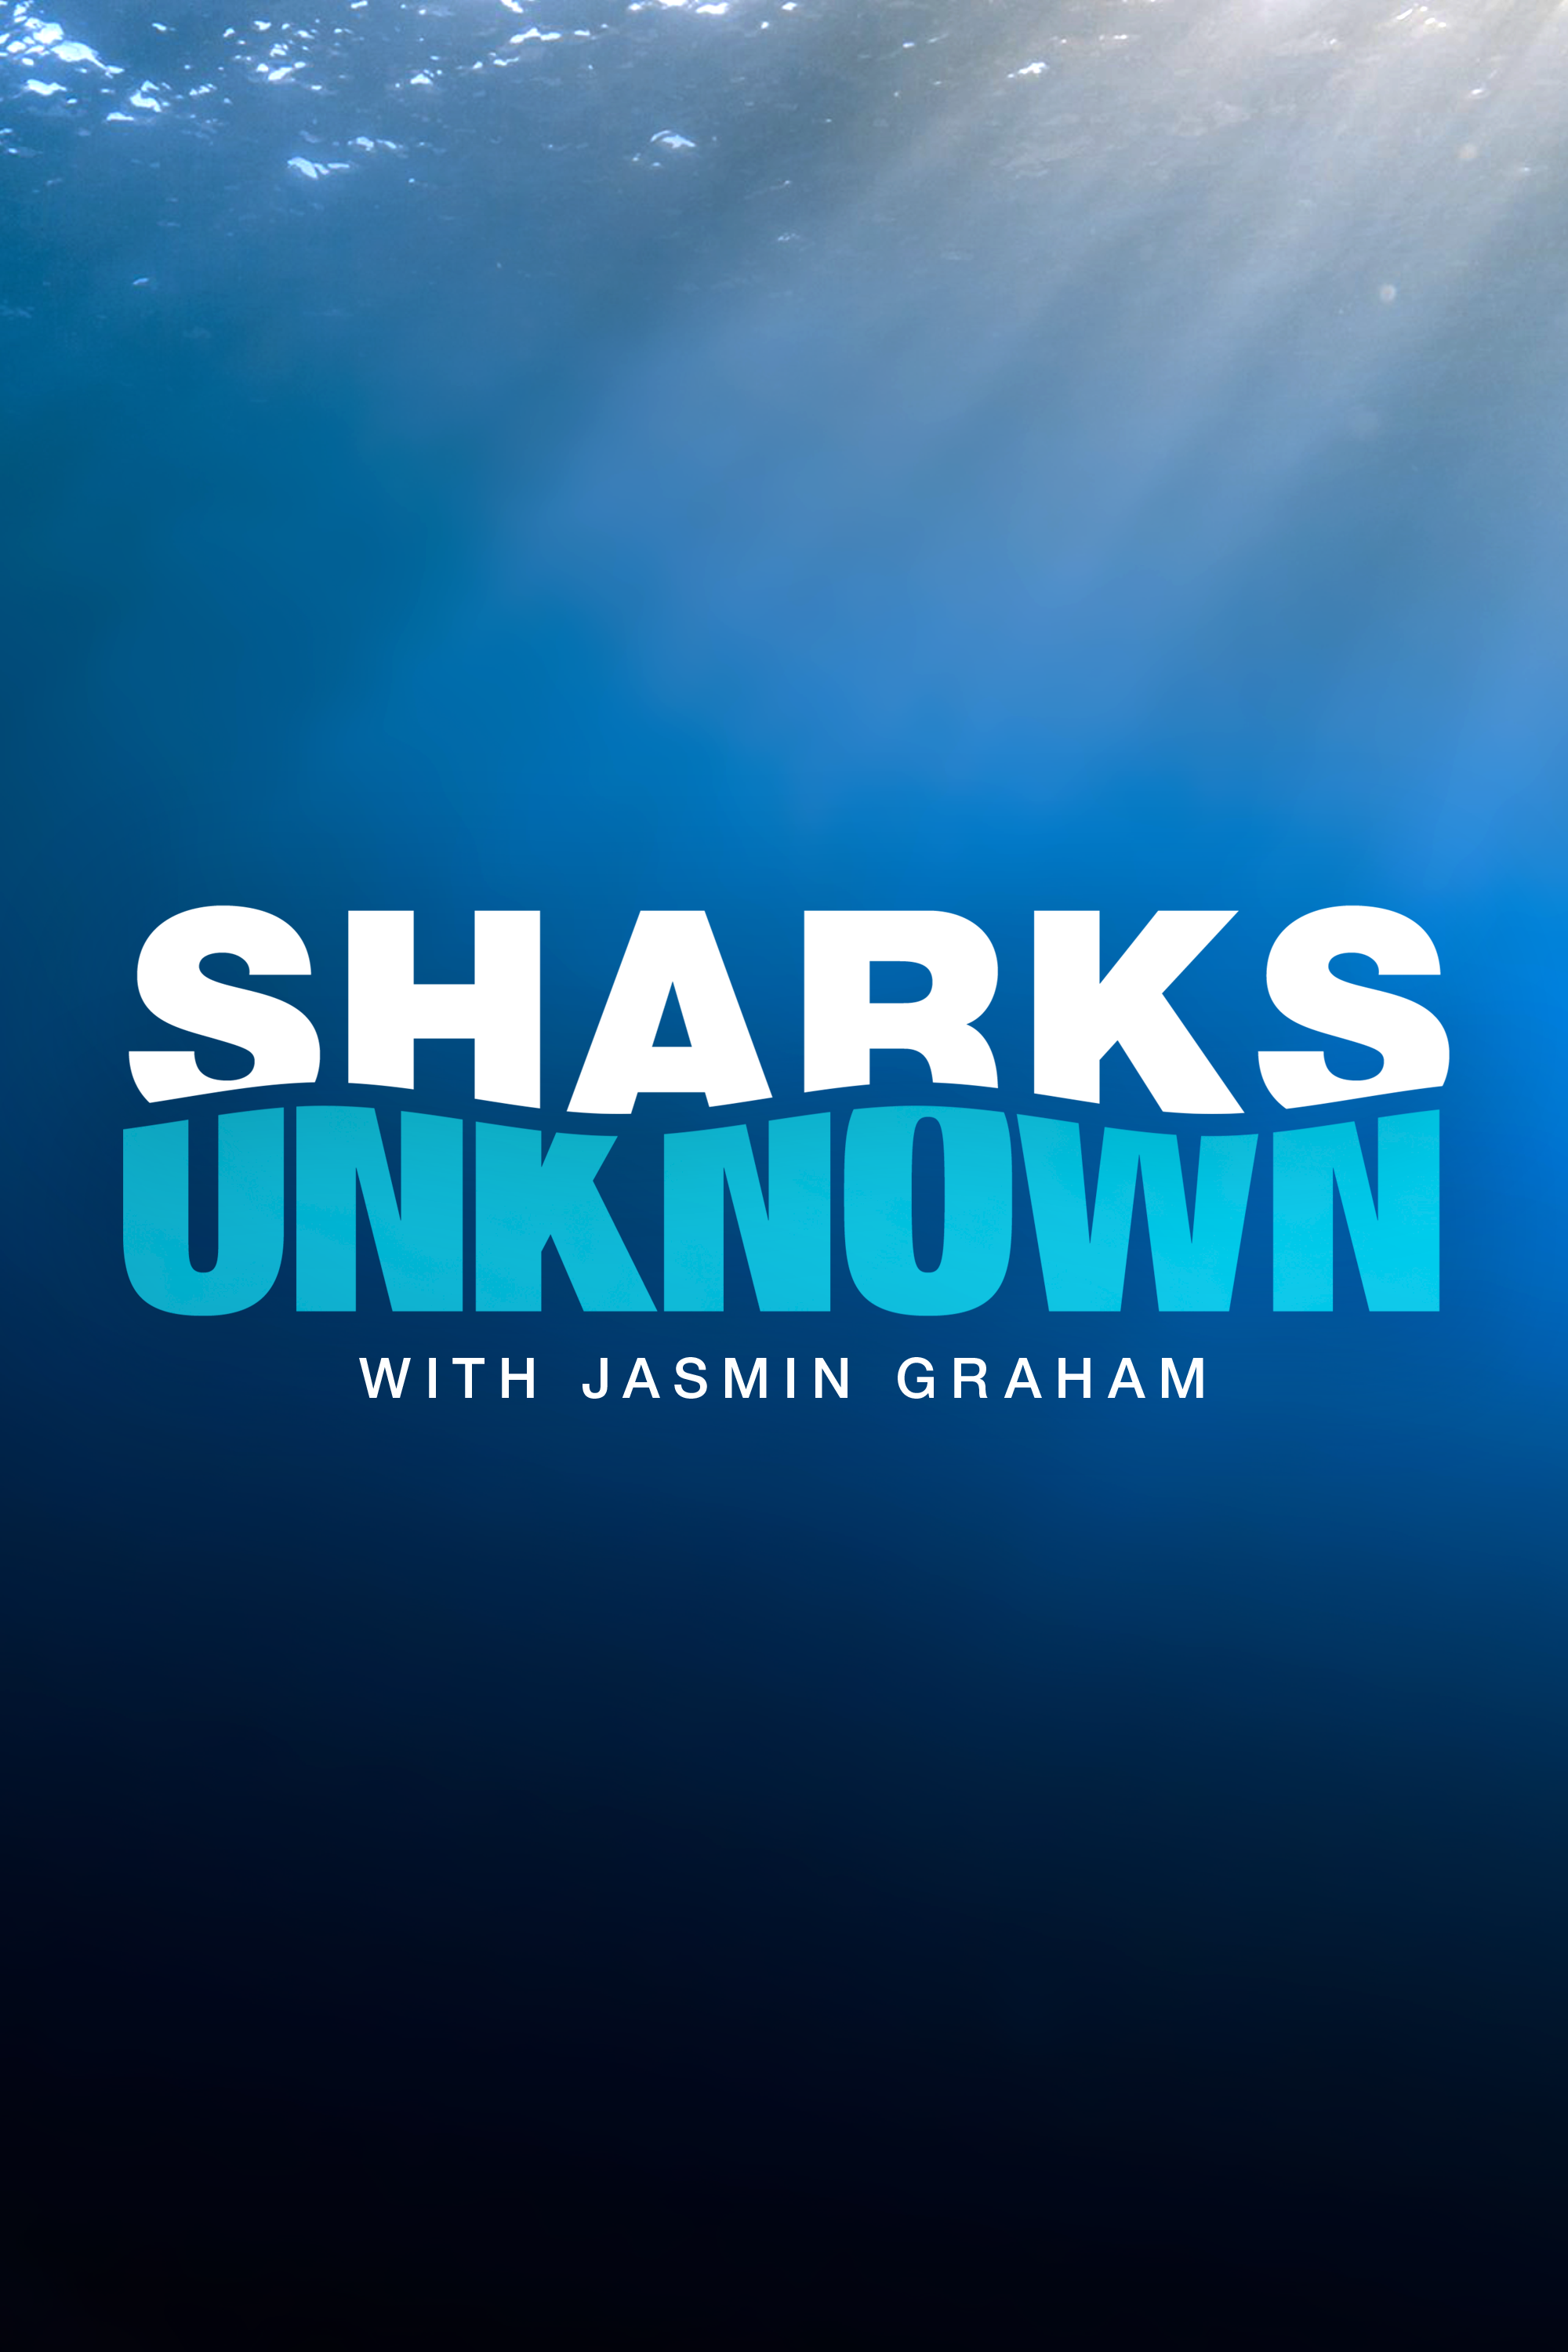 Sharks Unknown with Jasmin Graham